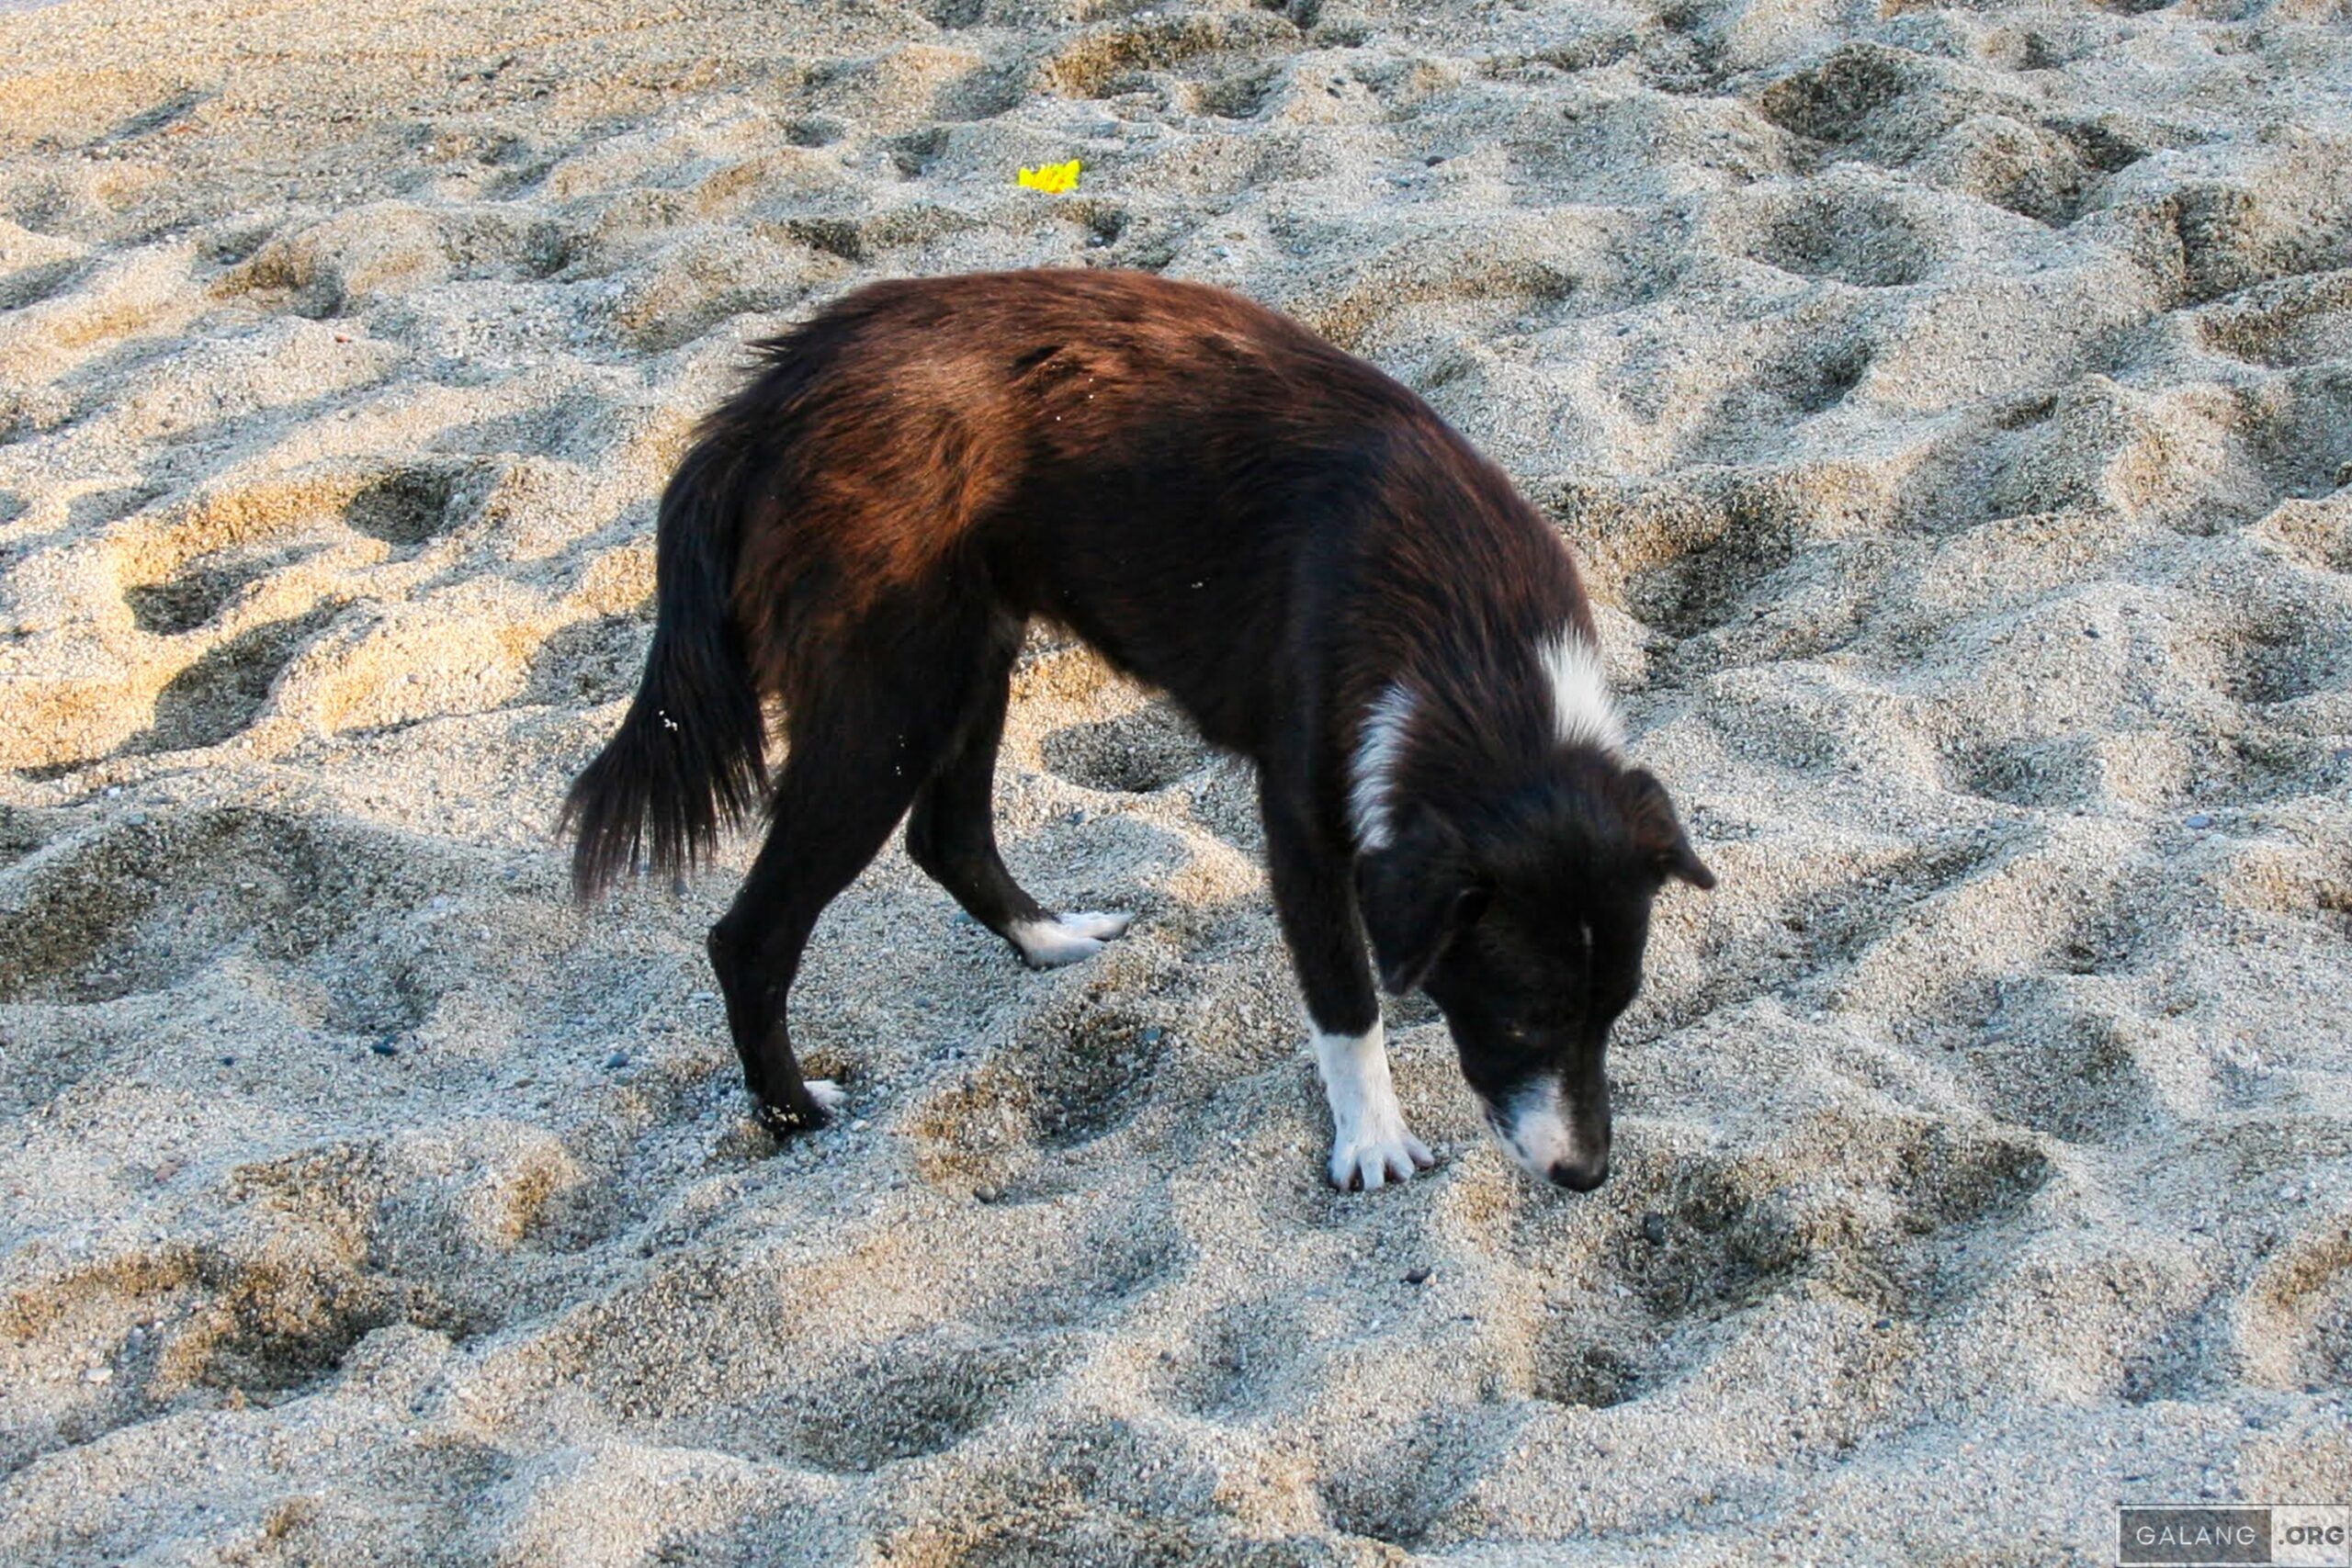 Beach doggo preparing to lie on the sand.